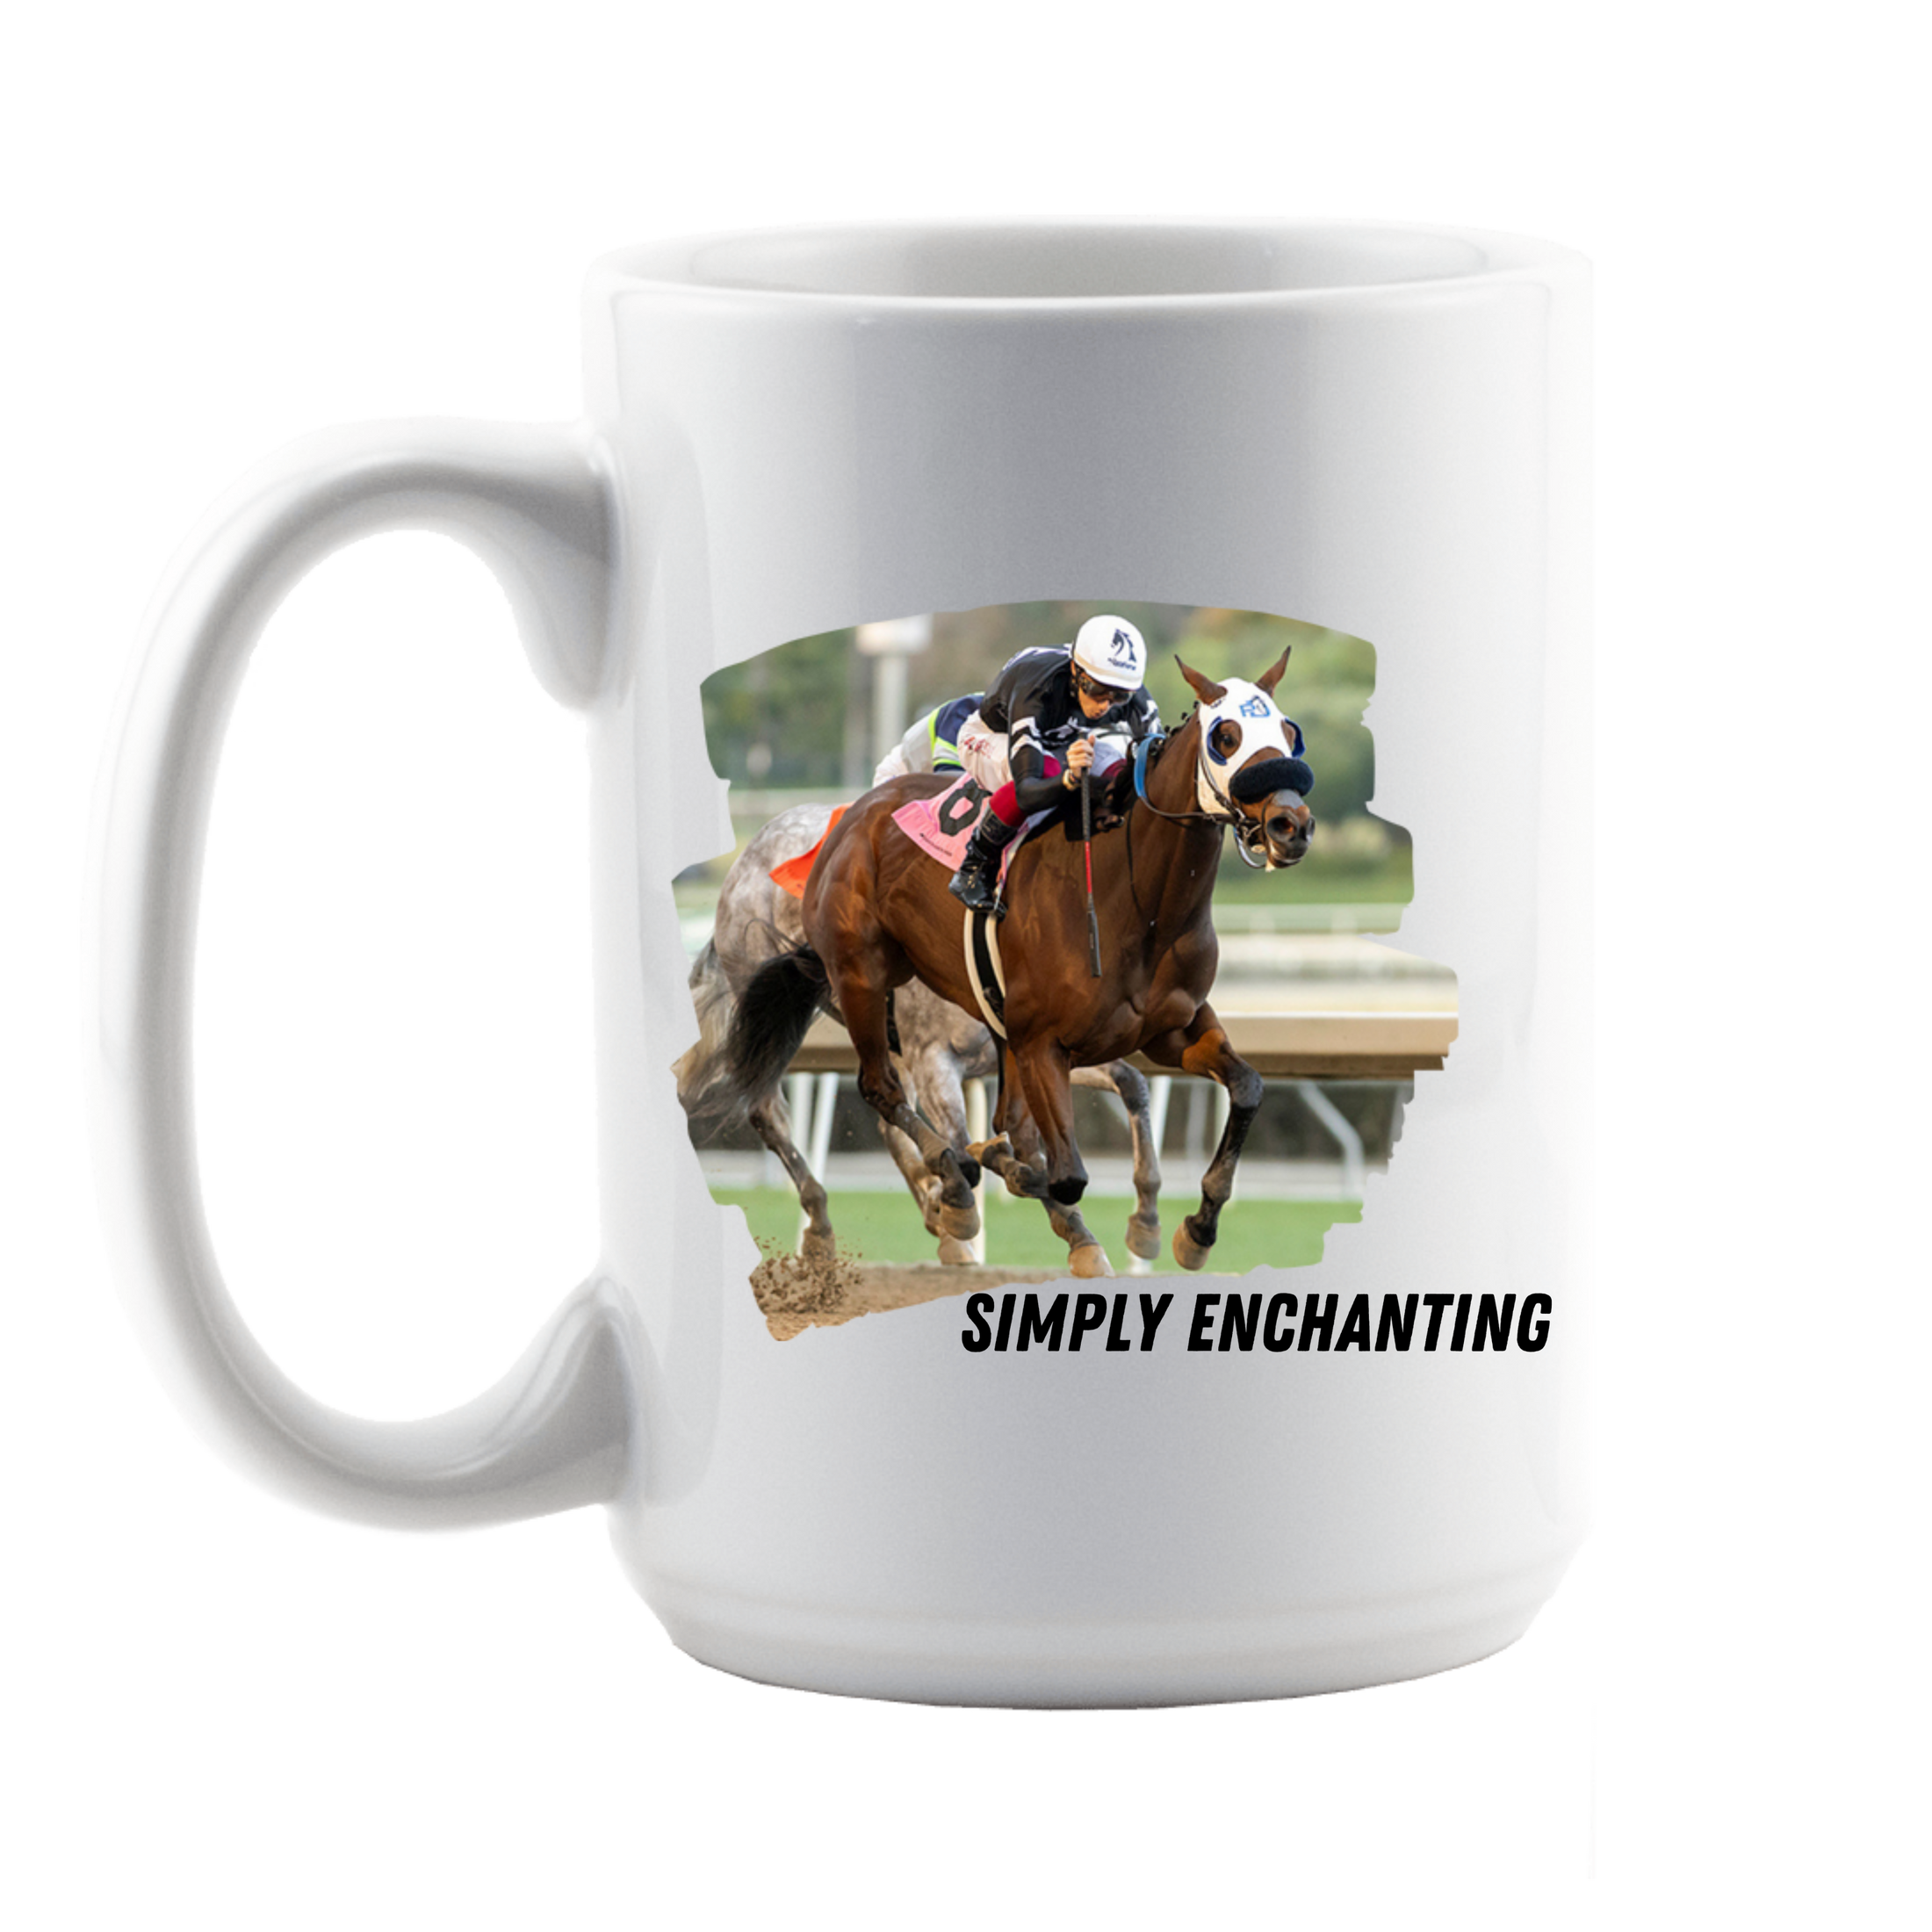 15 oz Simply Enchanting Coffee Cup